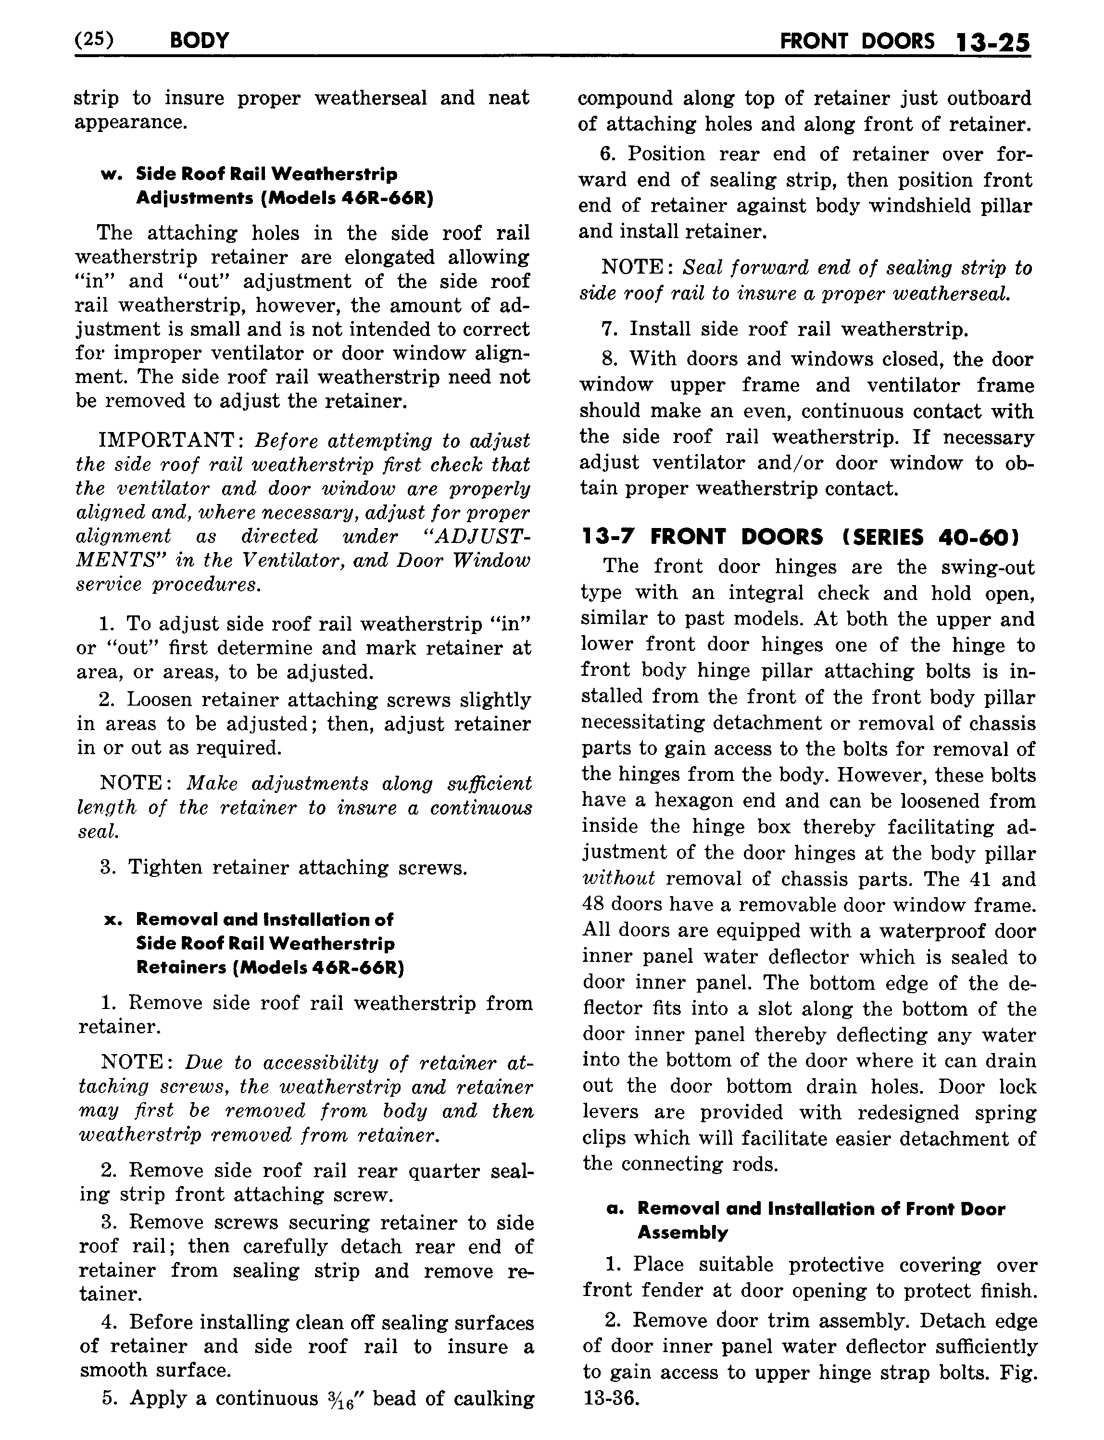 n_1957 Buick Body Service Manual-027-027.jpg